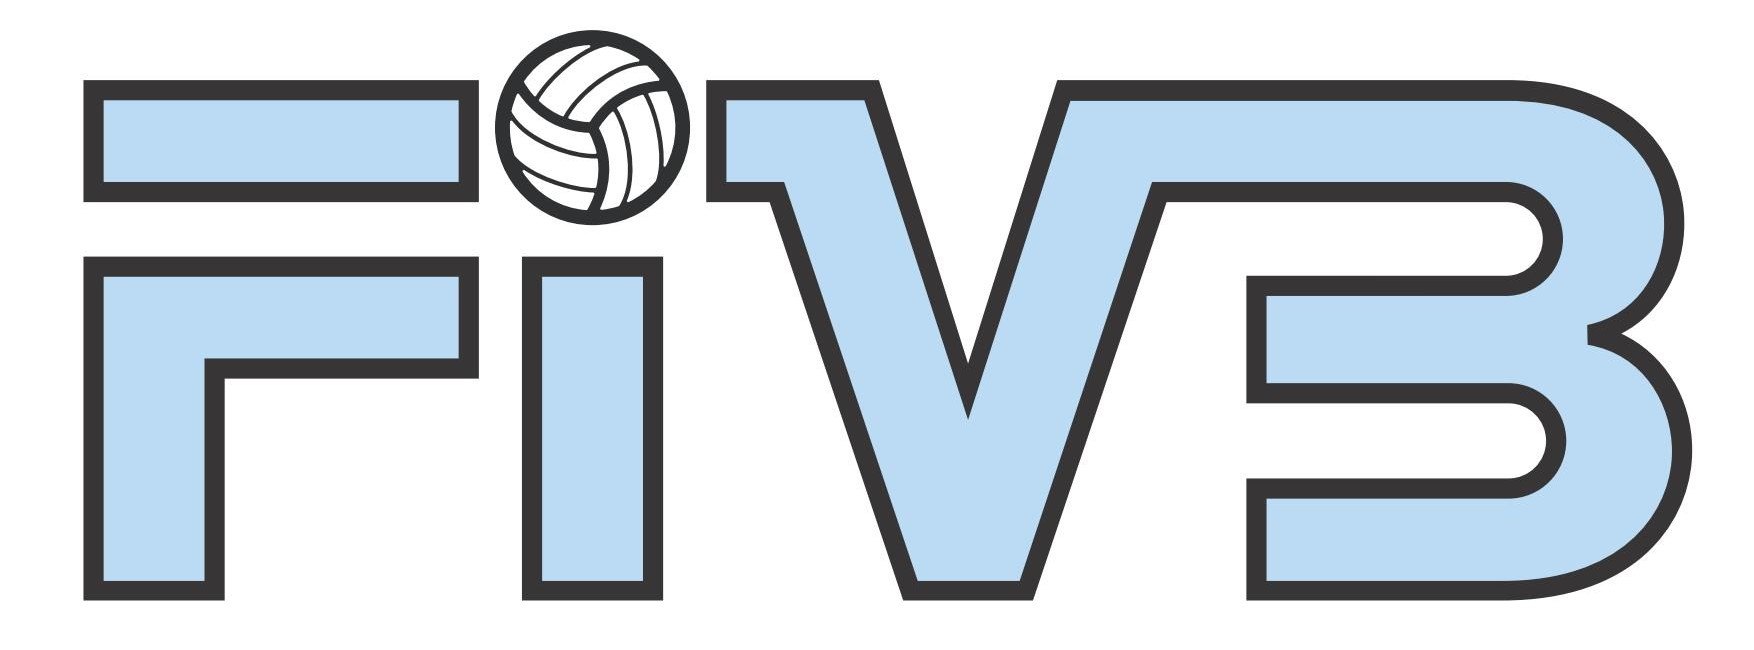 Federation Internationale de Volleyball FIVB logo1